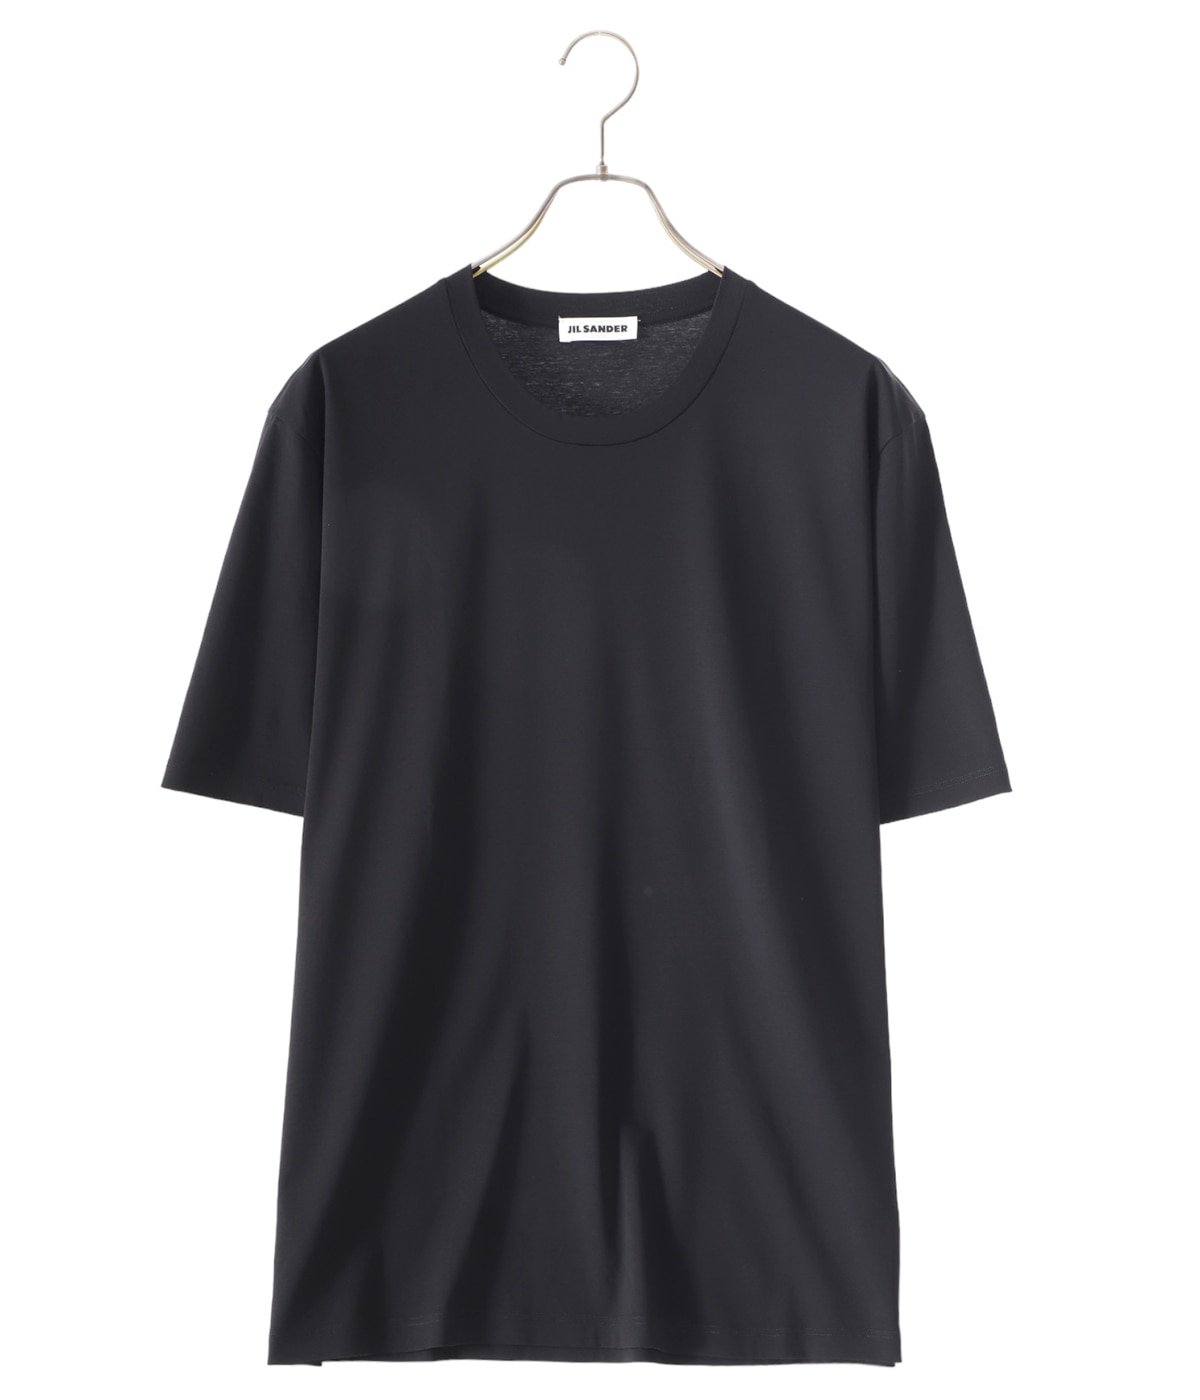 T-SHIRT SS | JIL SANDER(ジルサンダー) / トップス カットソー半袖・Tシャツ (メンズ)の通販 -  ARKnets(アークネッツ) 公式通販 【正規取扱店】